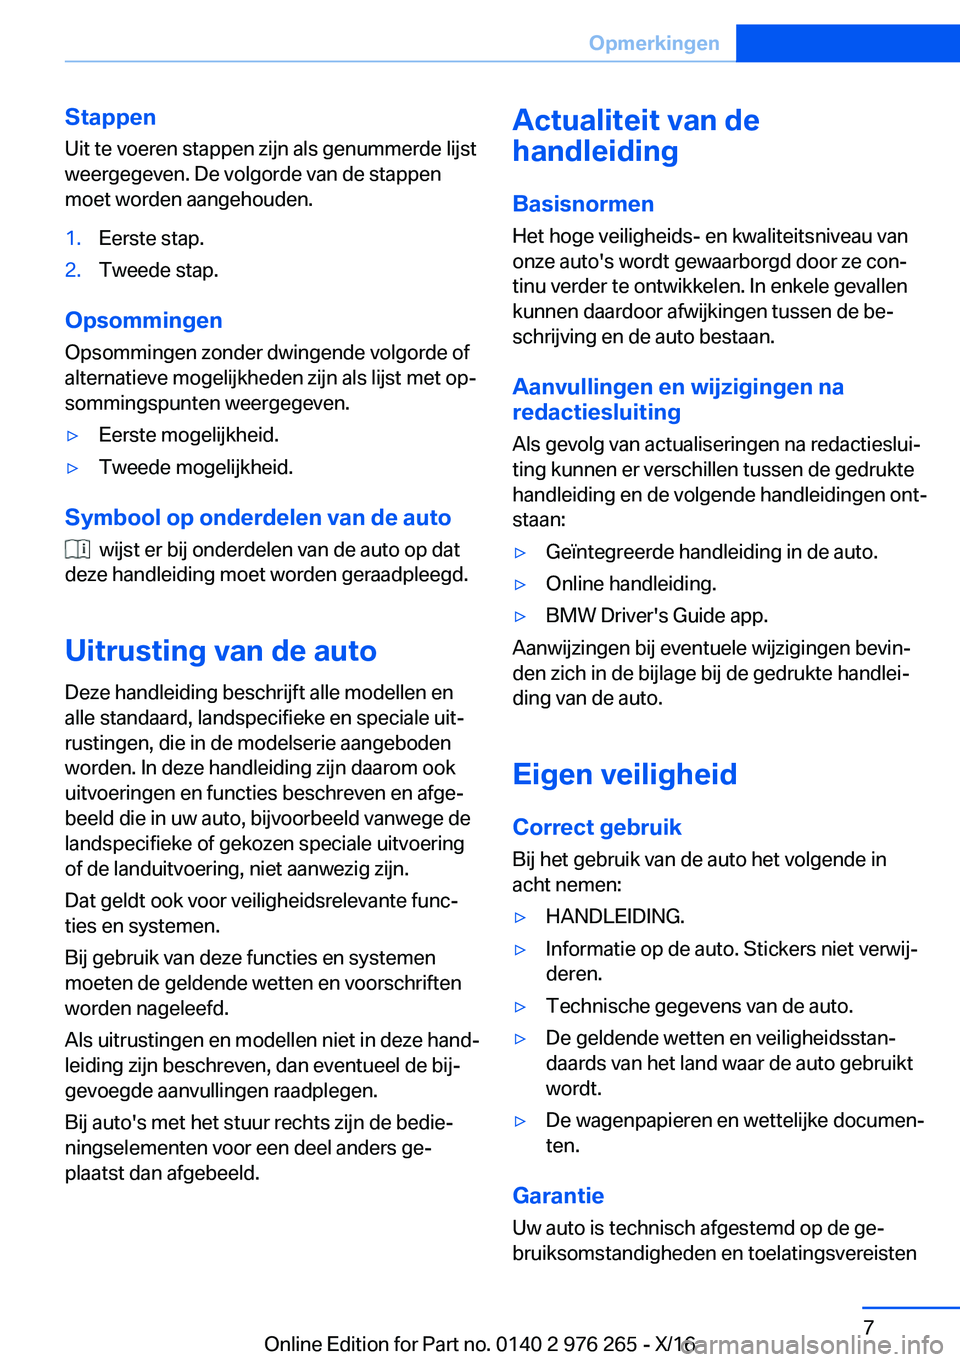 BMW 7 SERIES 2017  Instructieboekjes (in Dutch) �S�t�a�p�p�e�n
�U�i�t� �t�e� �v�o�e�r�e�n� �s�t�a�p�p�e�n� �z�i�j�n� �a�l�s� �g�e�n�u�m�m�e�r�d�e� �l�i�j�s�t �w�e�e�r�g�e�g�e�v�e�n�.� �D�e� �v�o�l�g�o�r�d�e� �v�a�n� �d�e� �s�t�a�p�p�e�n�m�o�e�t� �w